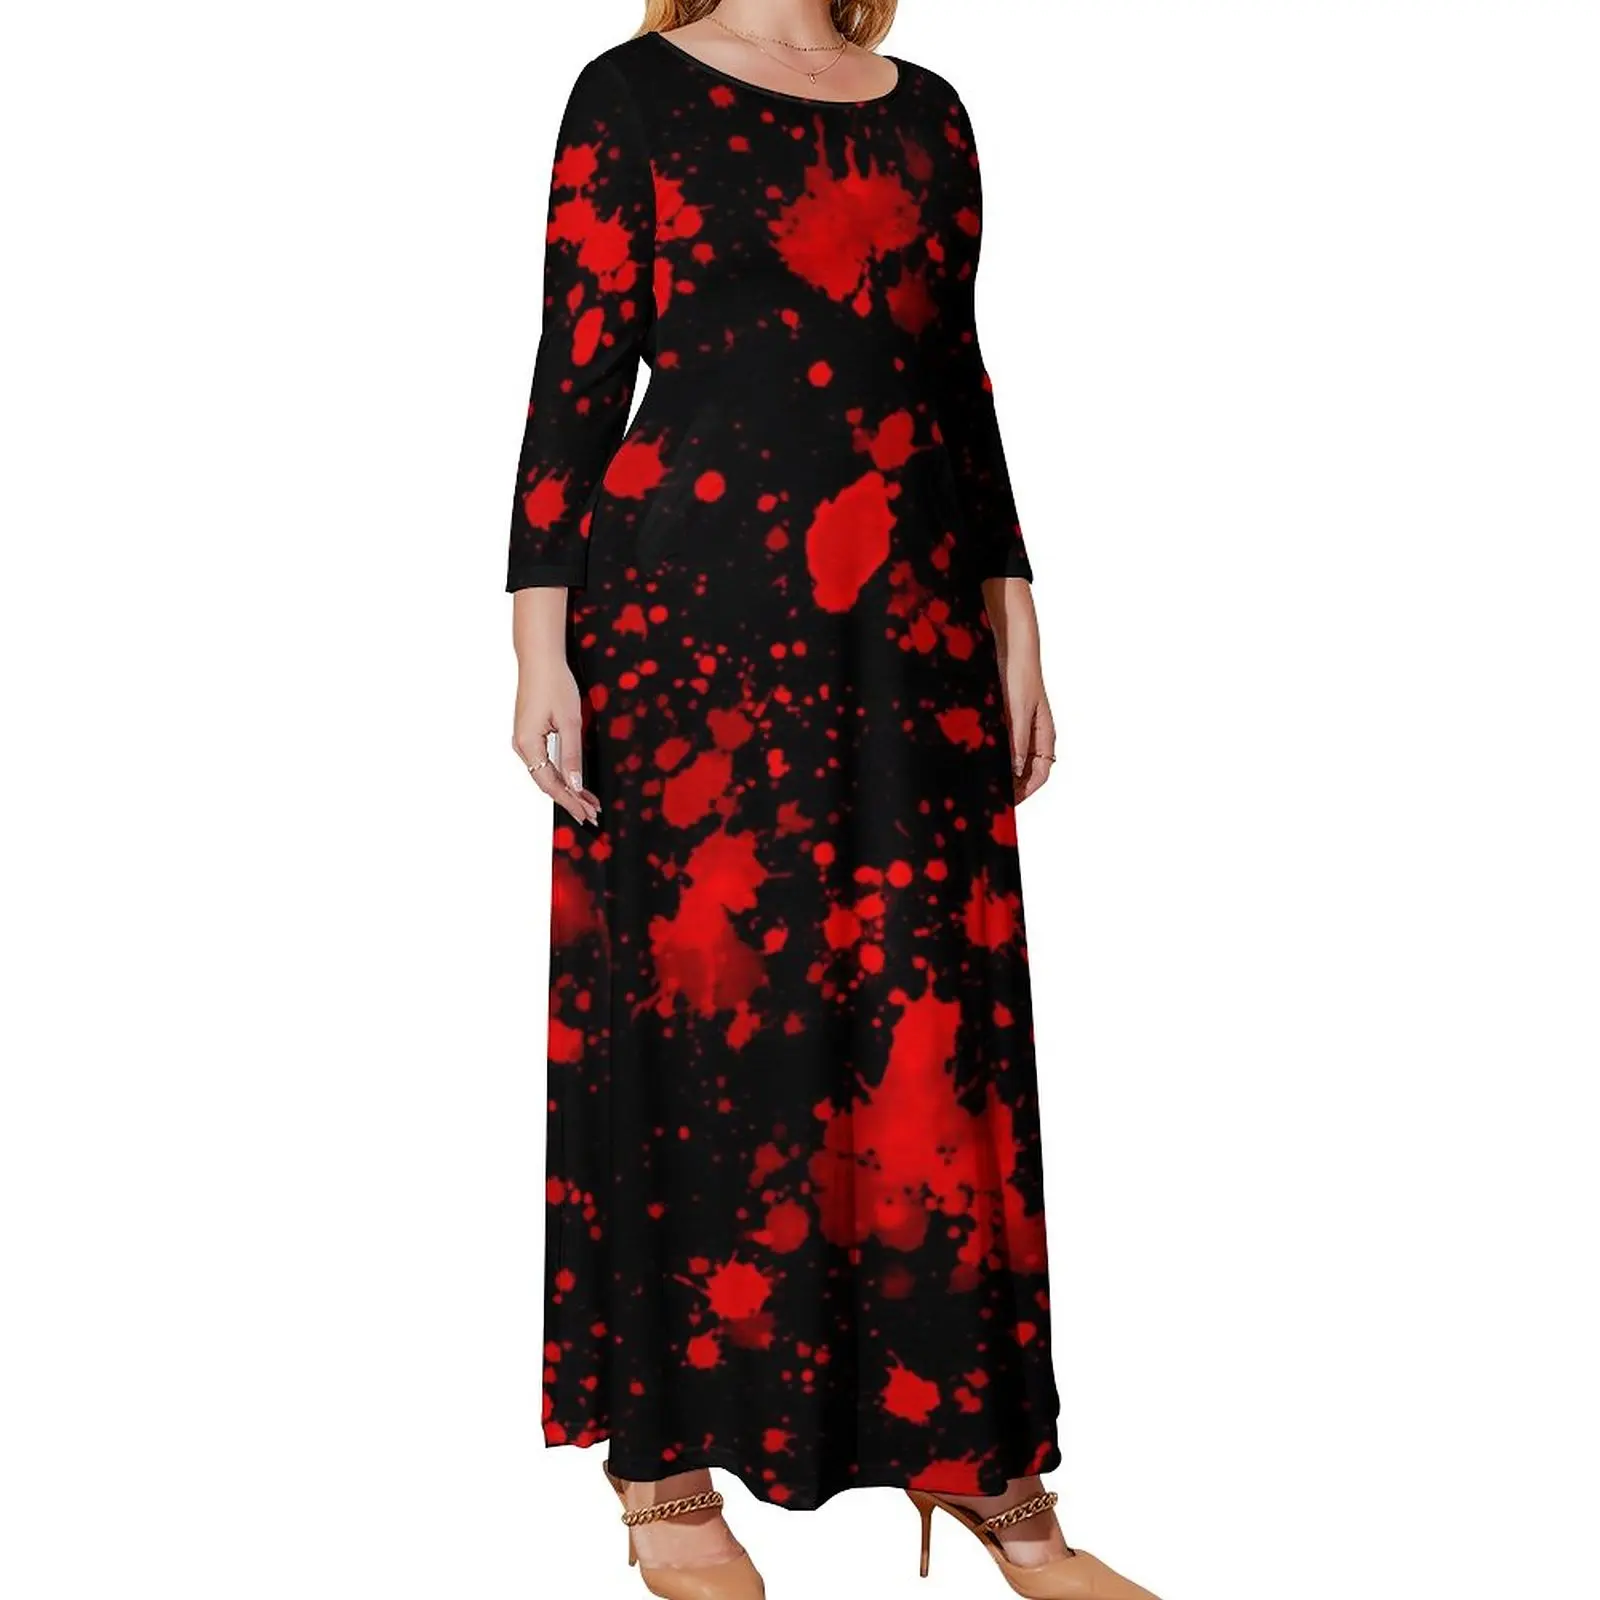 Red Paint Splatter Dress Artistic Splash Print Graphic Beach Dresses Streetwear Long Maxi Dress Elegant Clothes Plus Size 4XL